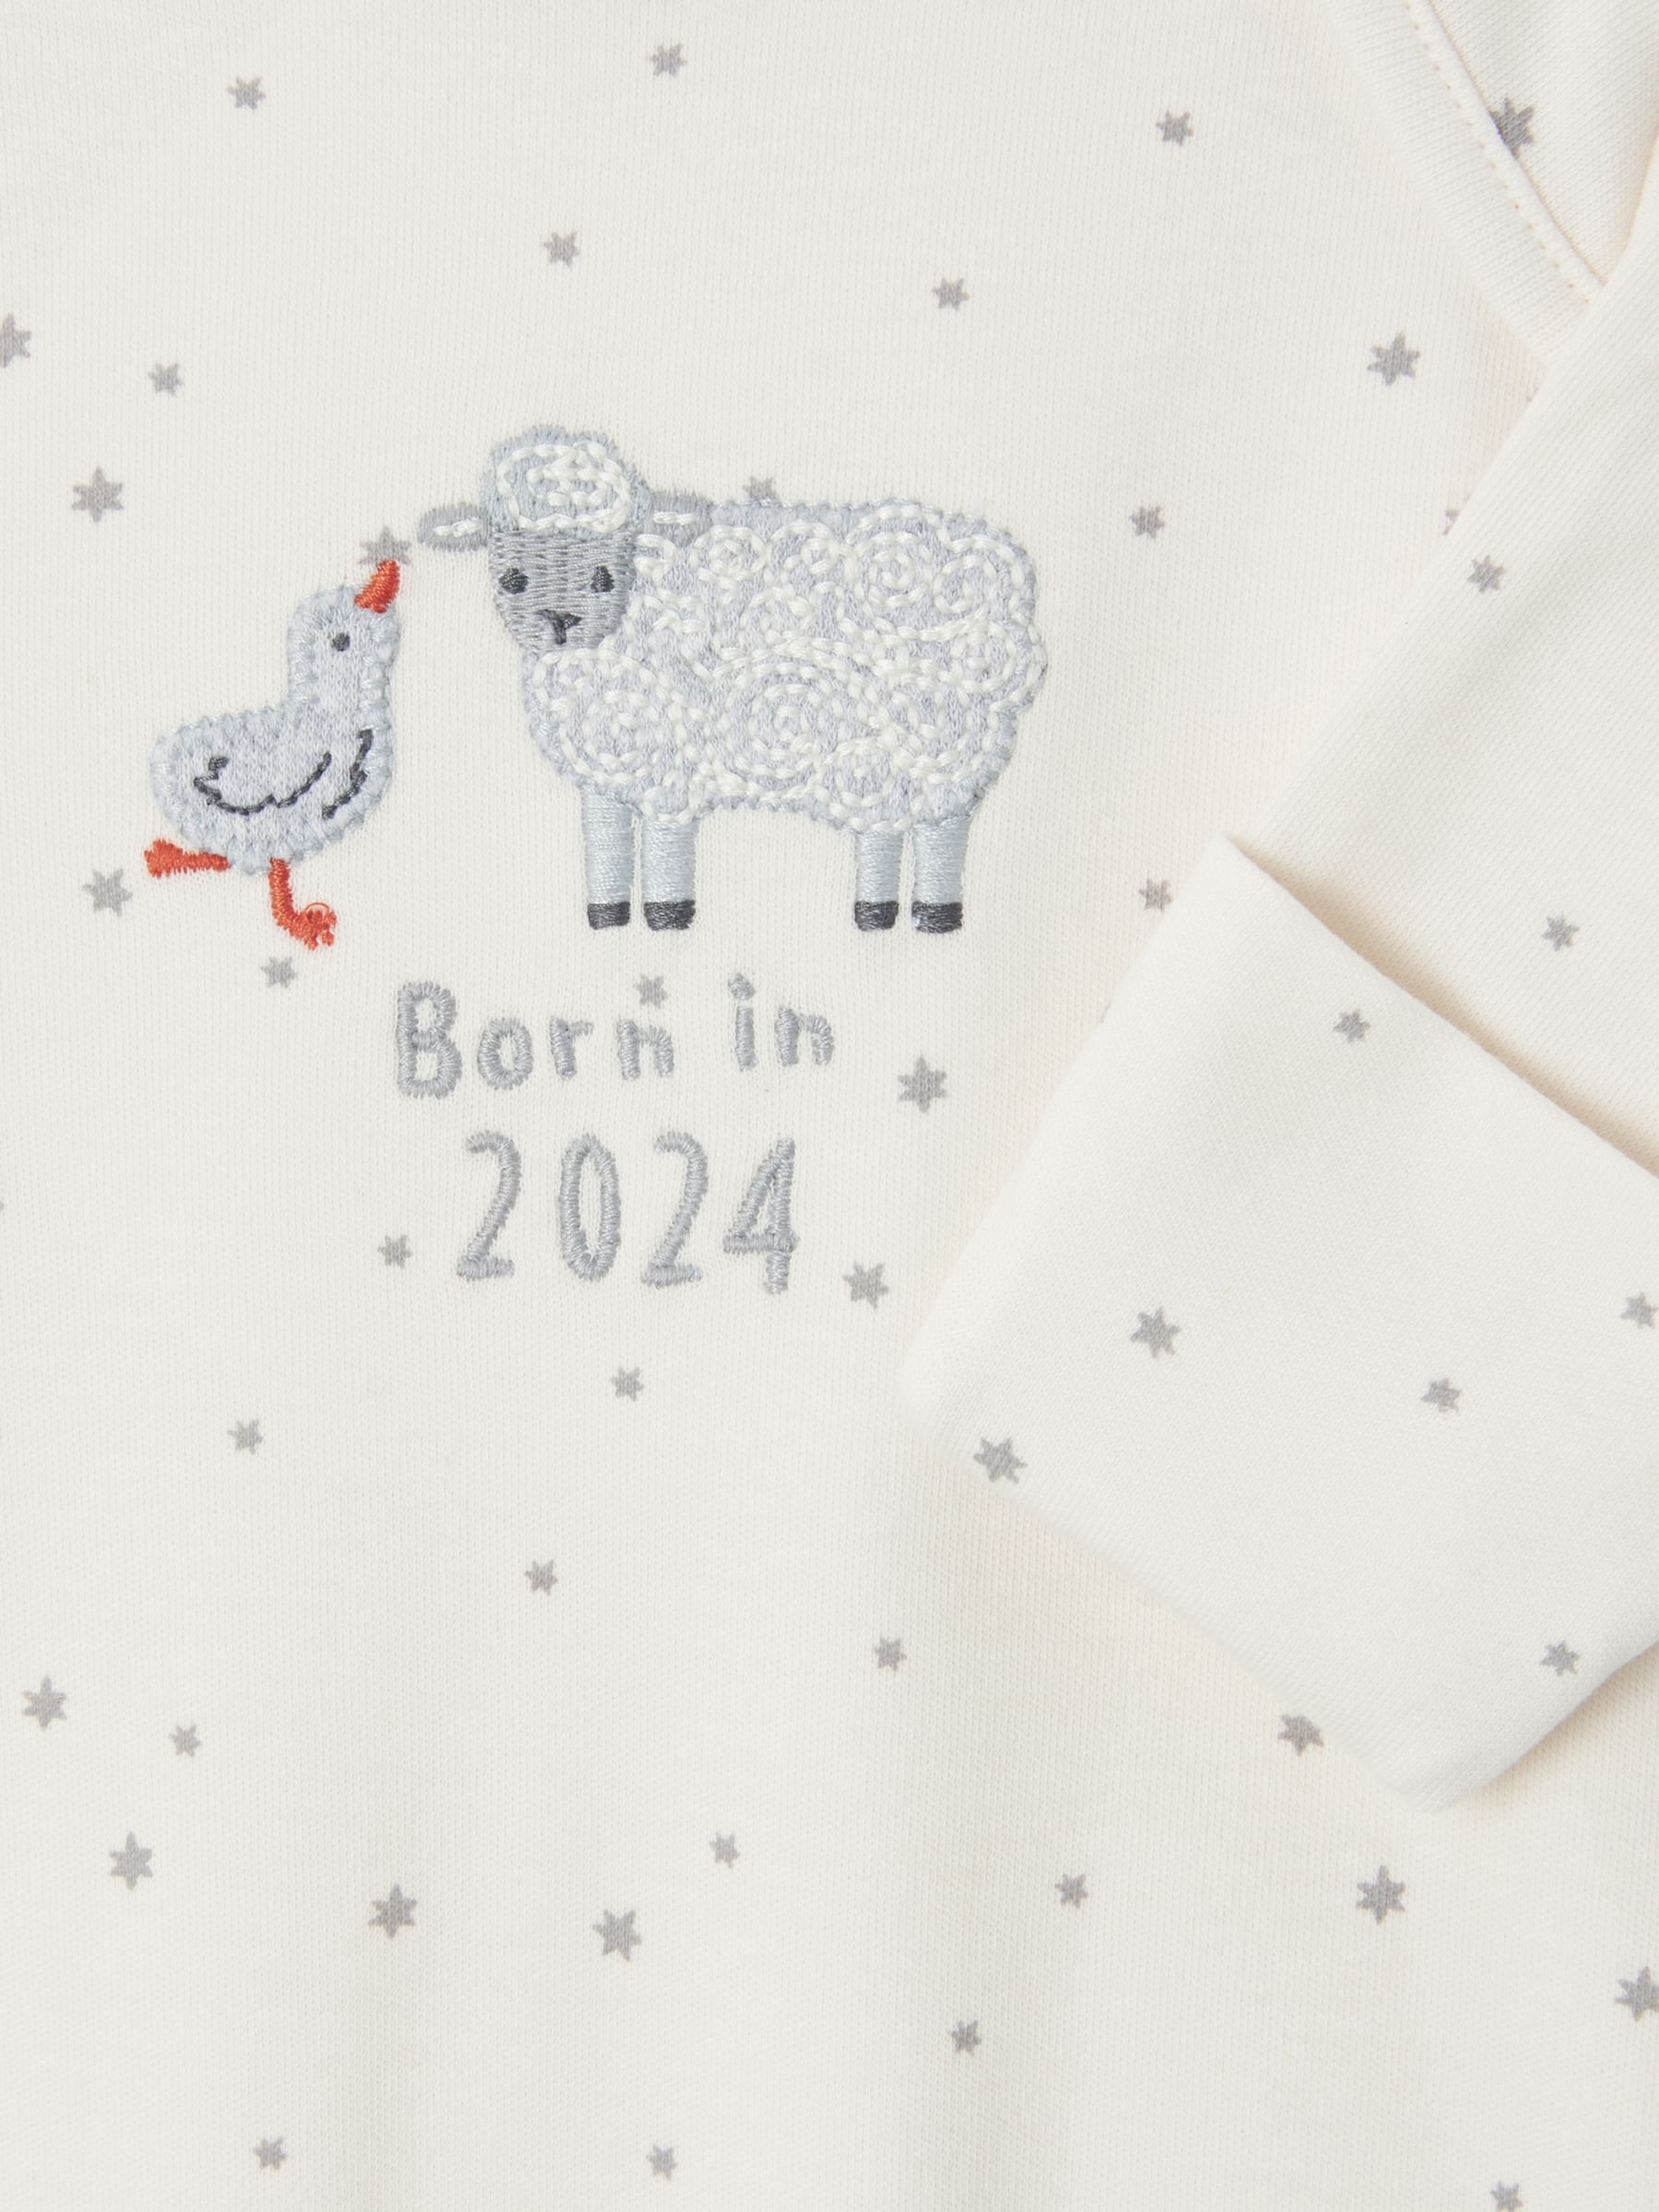 John Lewis Baby Born in 2024 Star Sleepsuit, Cream, 3-6 months